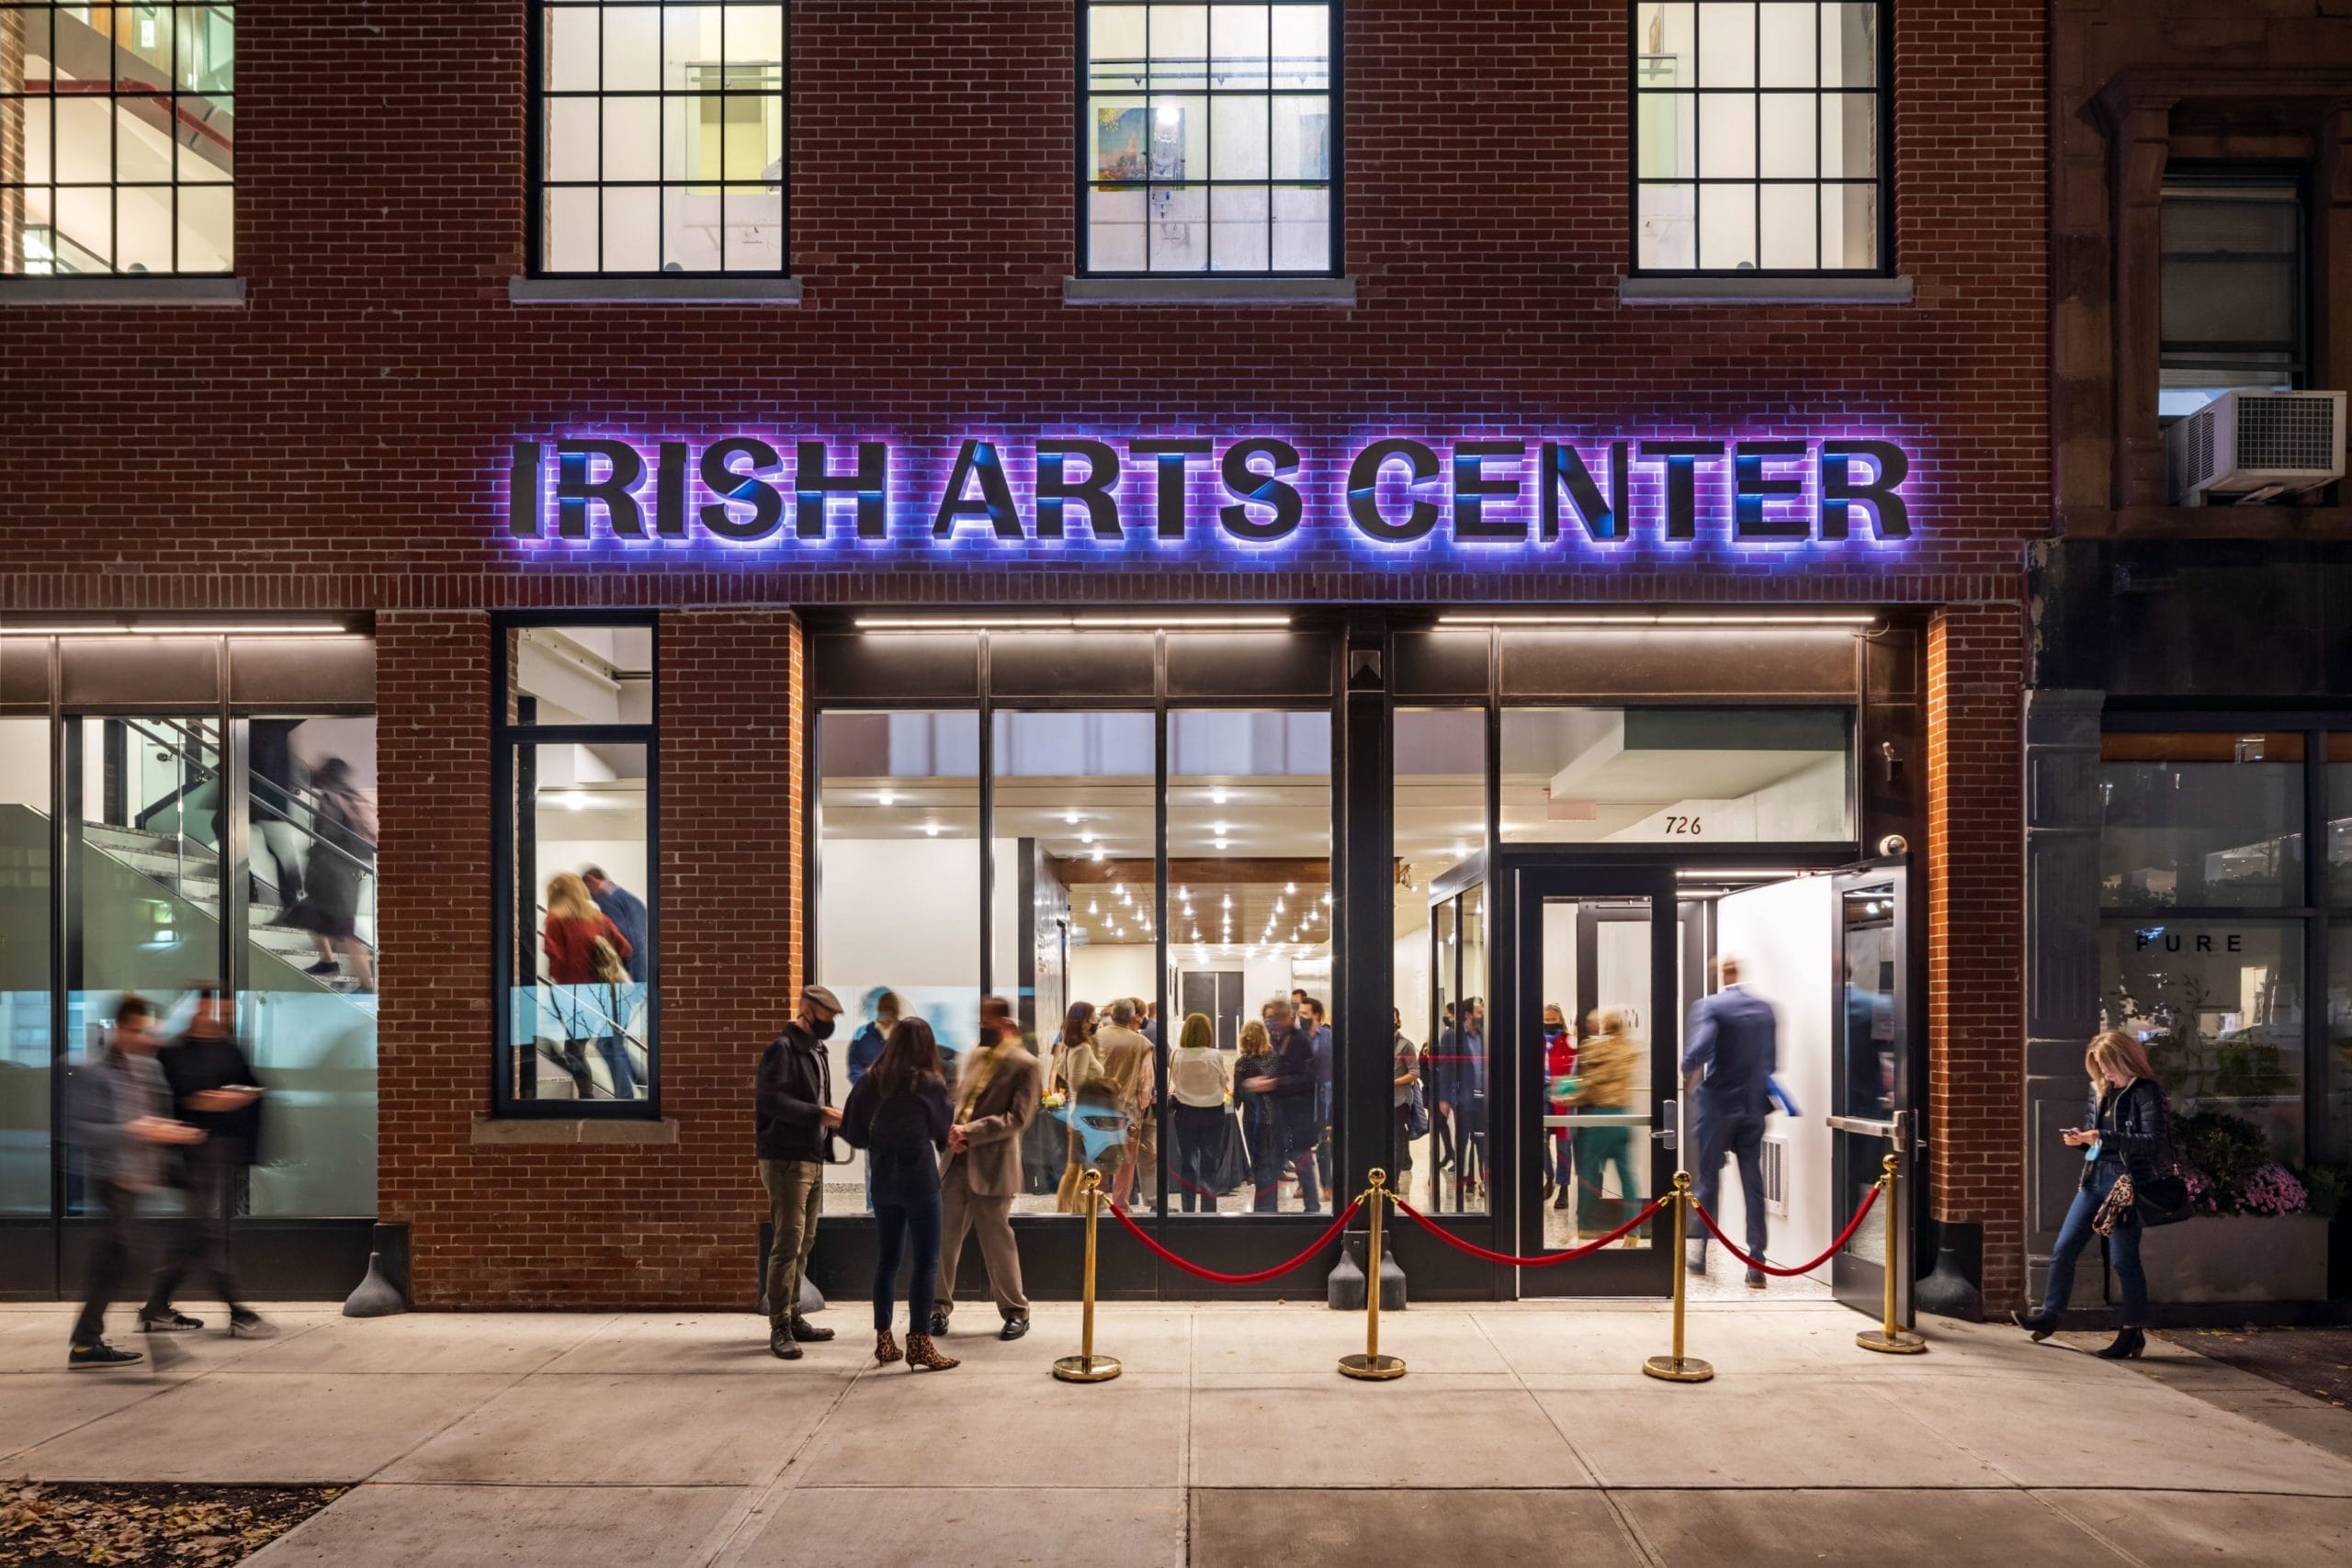 The exterior of the Irish Arts Center.